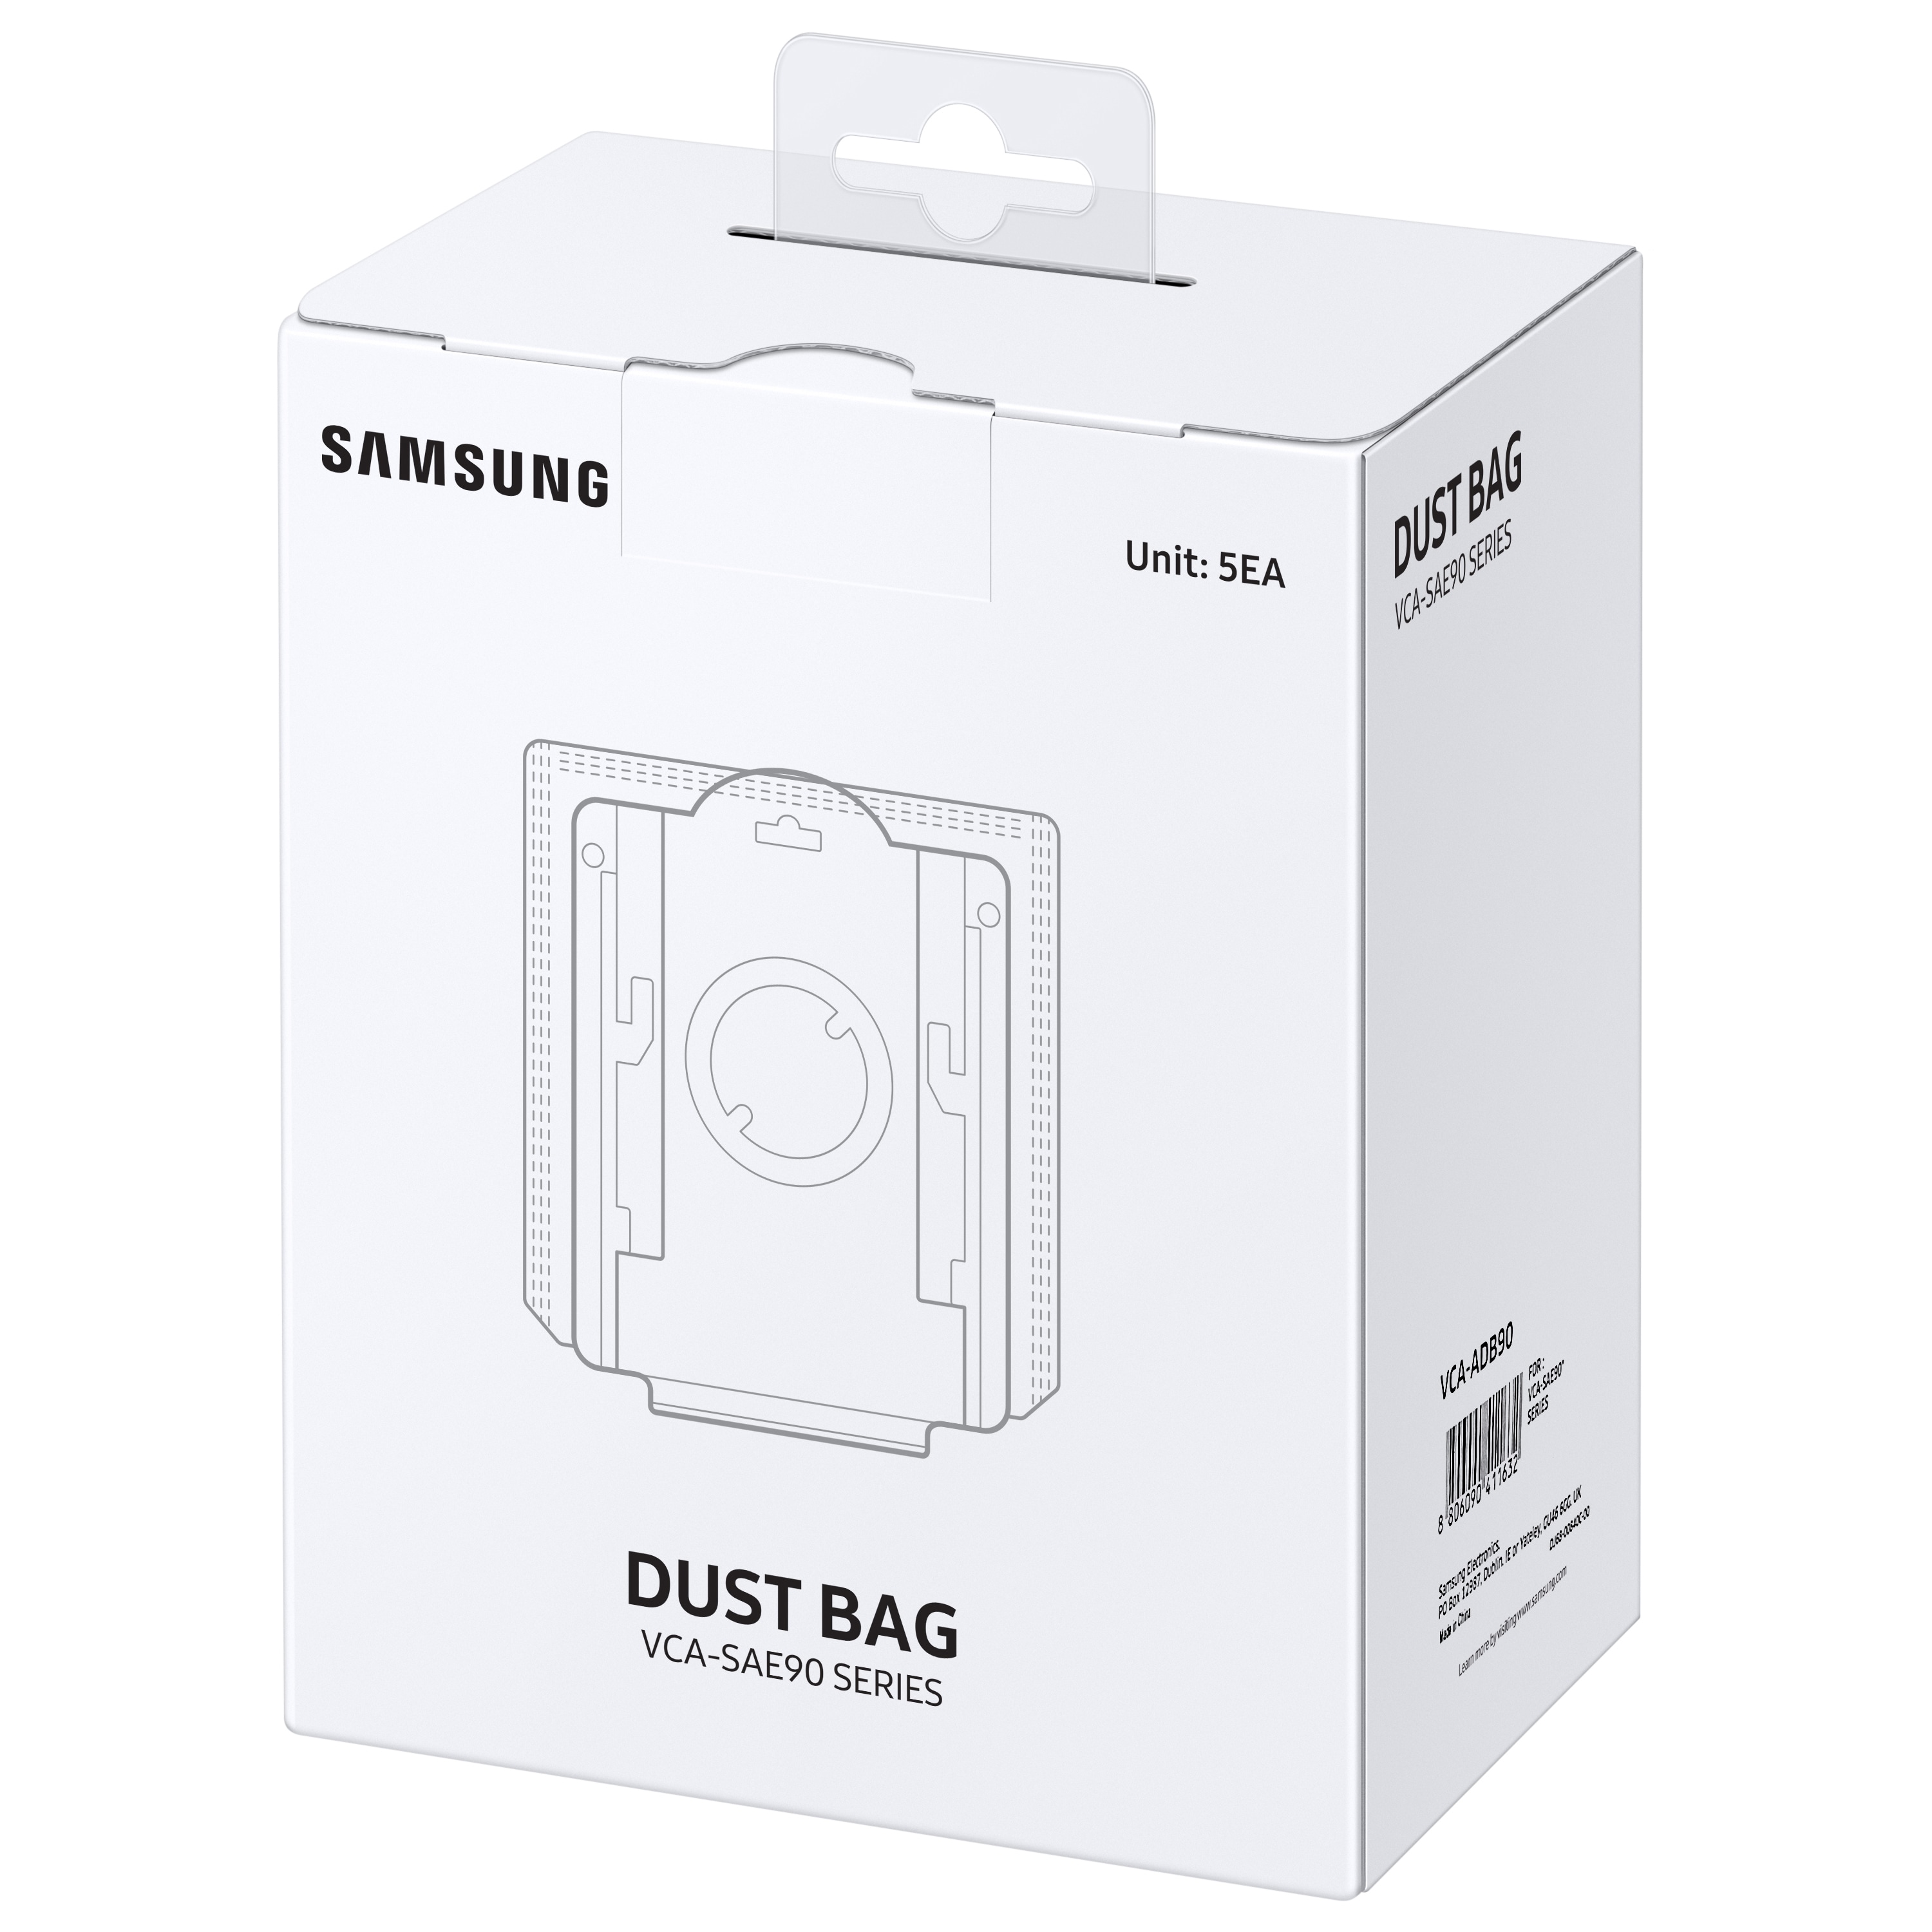 Samsung Vacuum Cleaner Bags for Model 9000 (5 pack) #XSM901 - 901